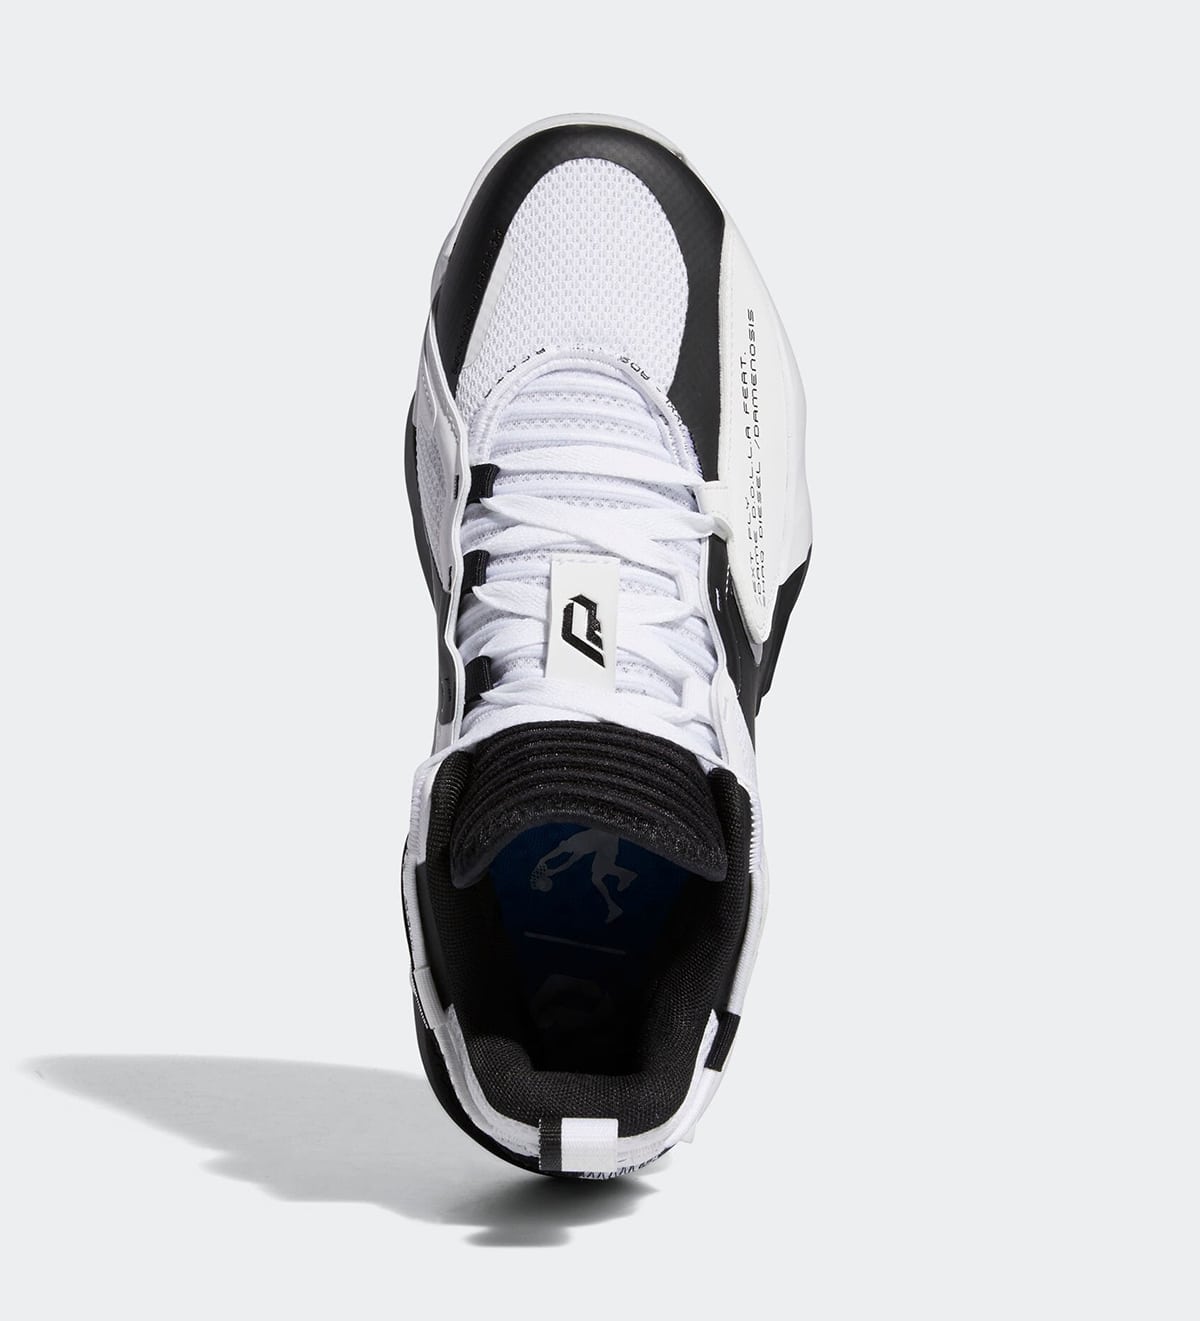 offer Regelmæssigt Forgænger adidas Dame 7 “Damenosis” Honors Shaq's Signature Reebok Sneaker | House of  Heat°